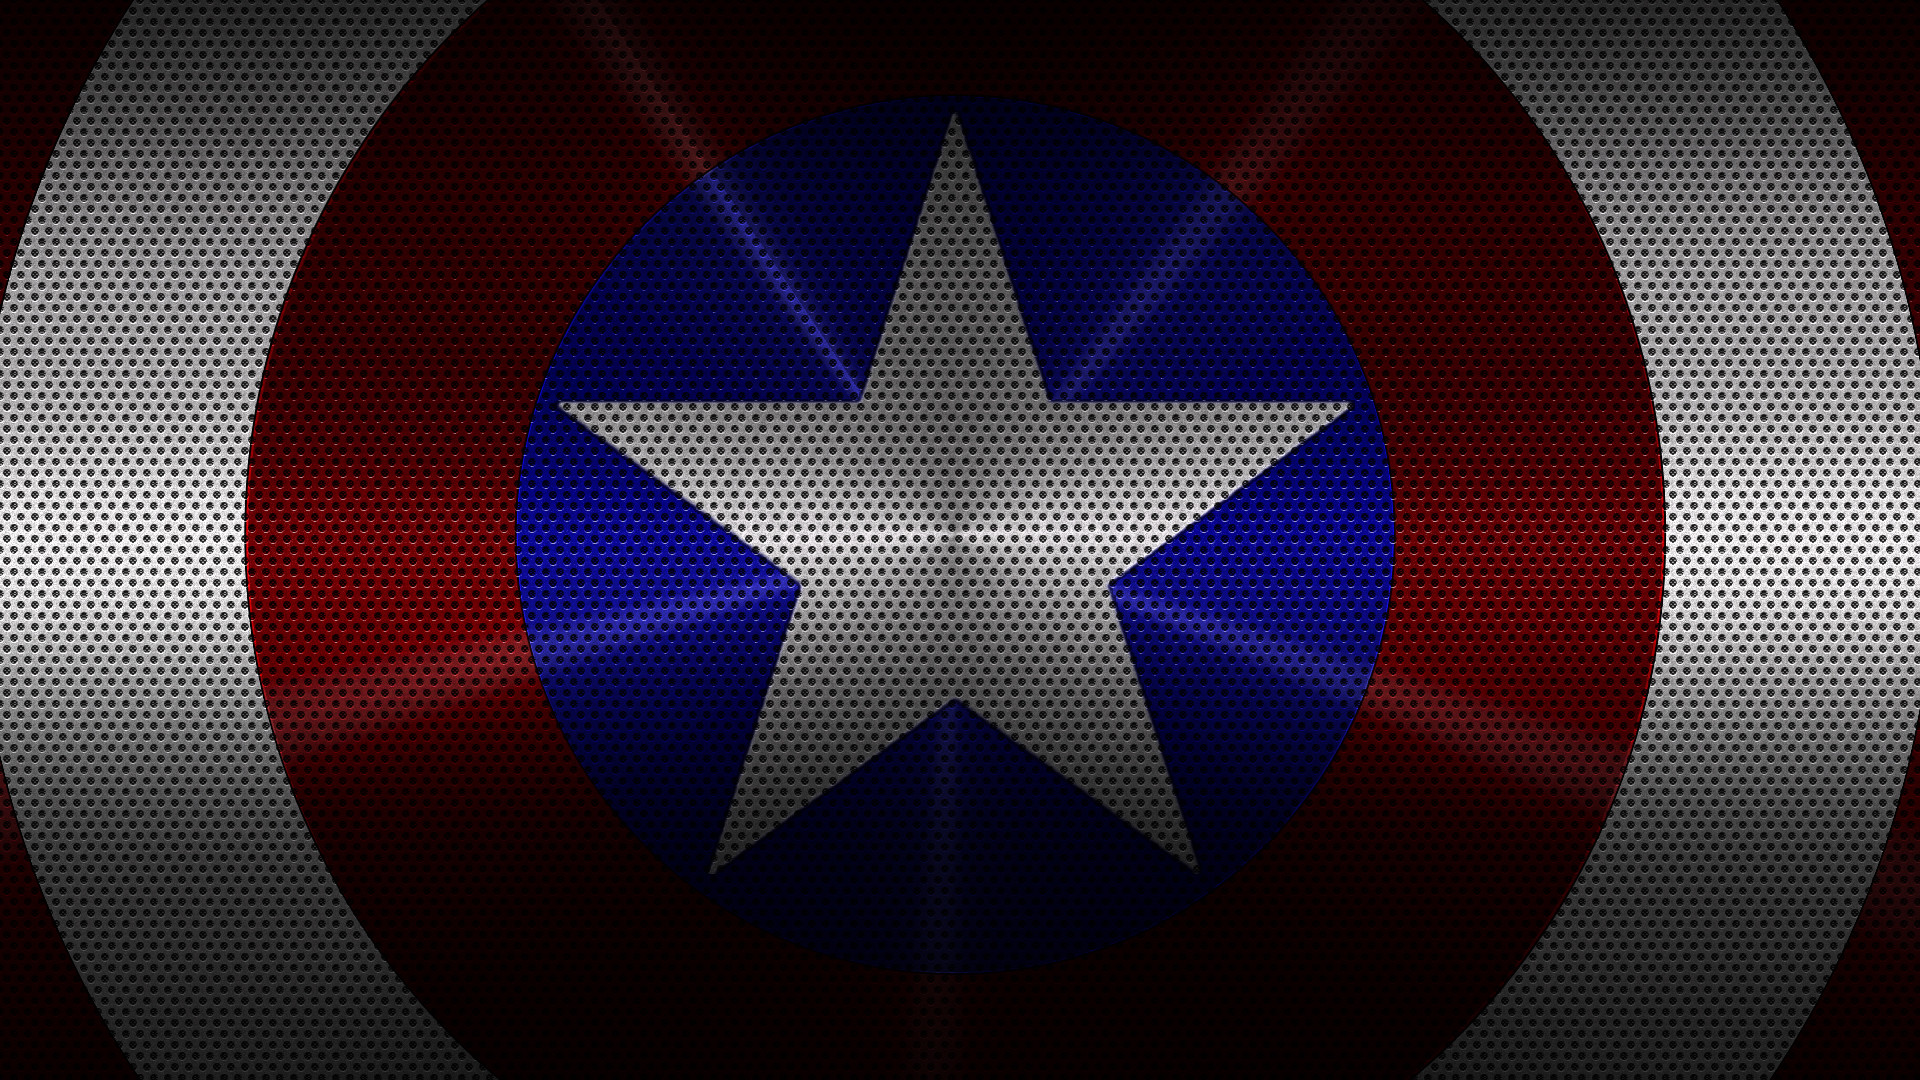 Captain America Shield Wallpaper HD (84+ images)